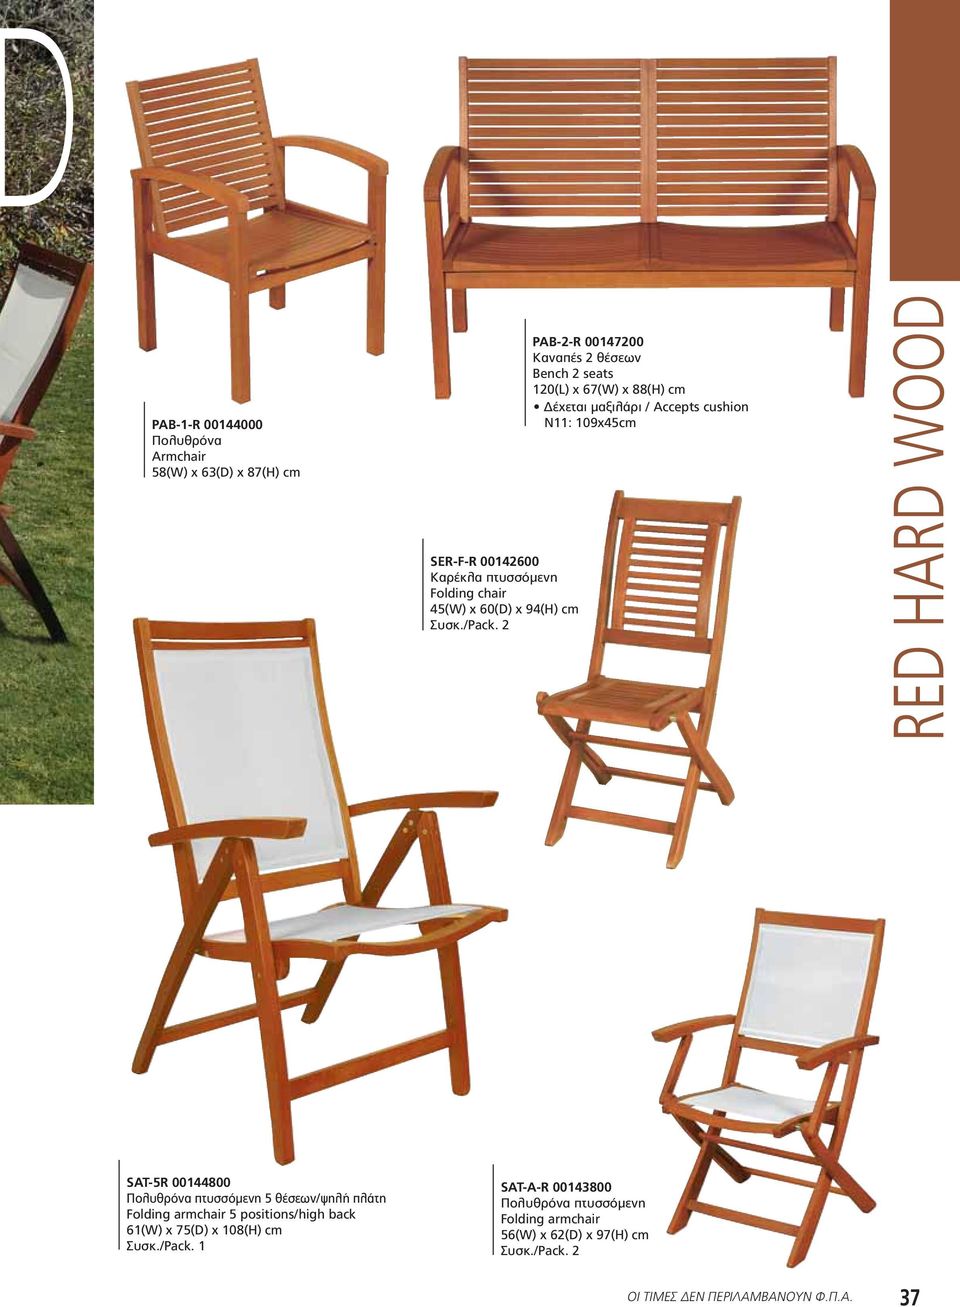 RED HARD WOOD SAT-5R 00144800 Πολυθρόνα πτυσσόμενη 5 θέσεων/ψηλή πλάτη Folding armchair 5 positions/high back 61(W) x 75(D) x